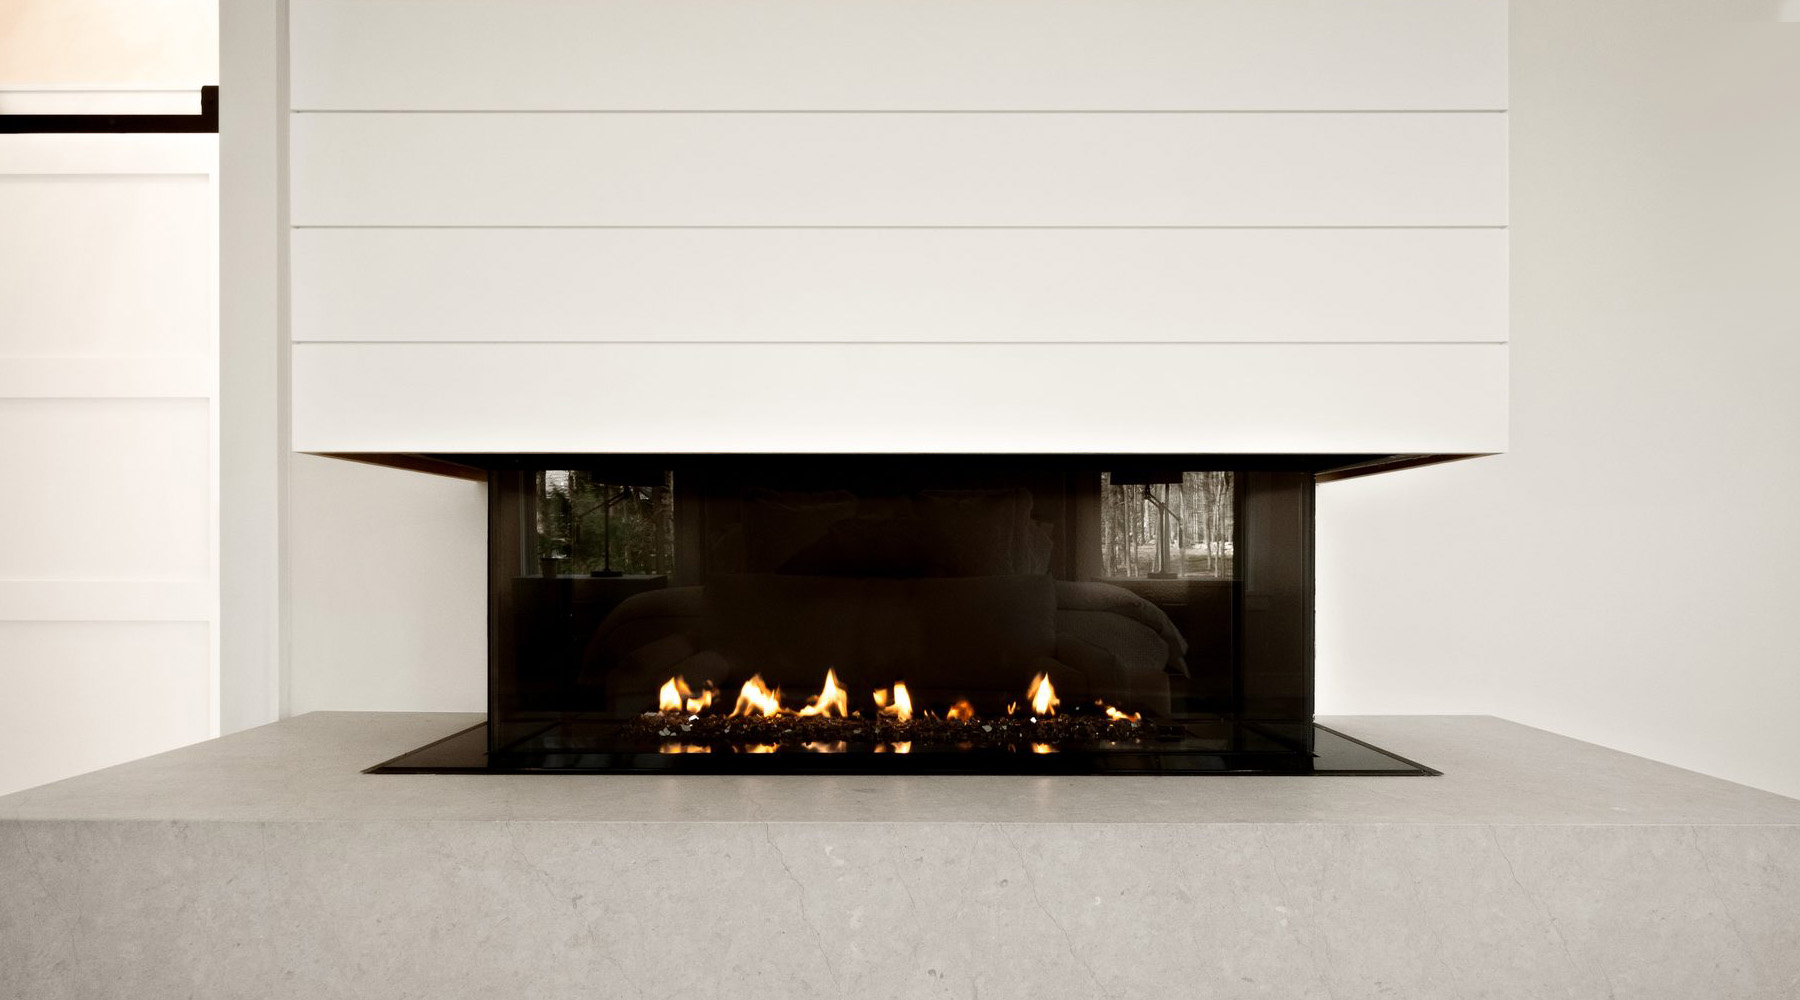 can concrete countertops handle heat Concrete countertops surrounding a gas fireplace.